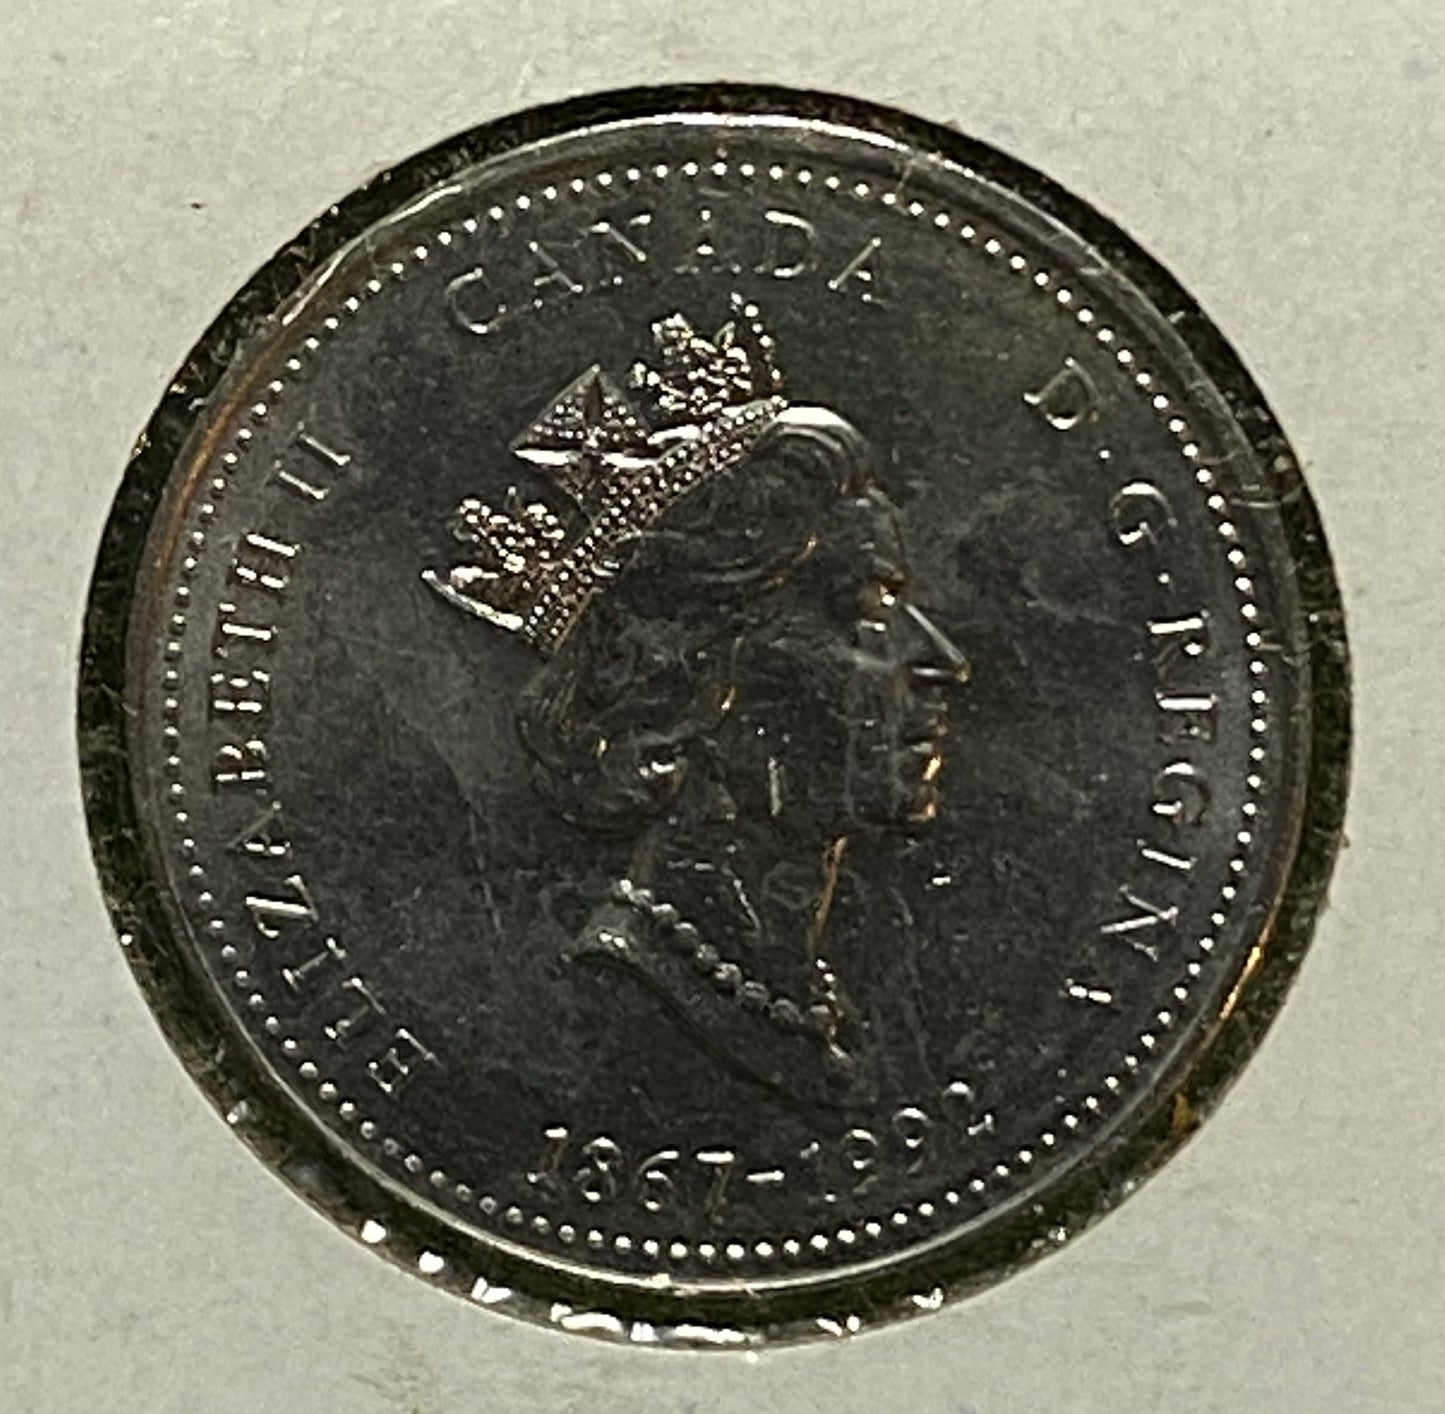 CANADIAN 1992 ONTARIO Queen Elizabeth II  25 CENTS QUARTER COIN AU / UNC CONDITION